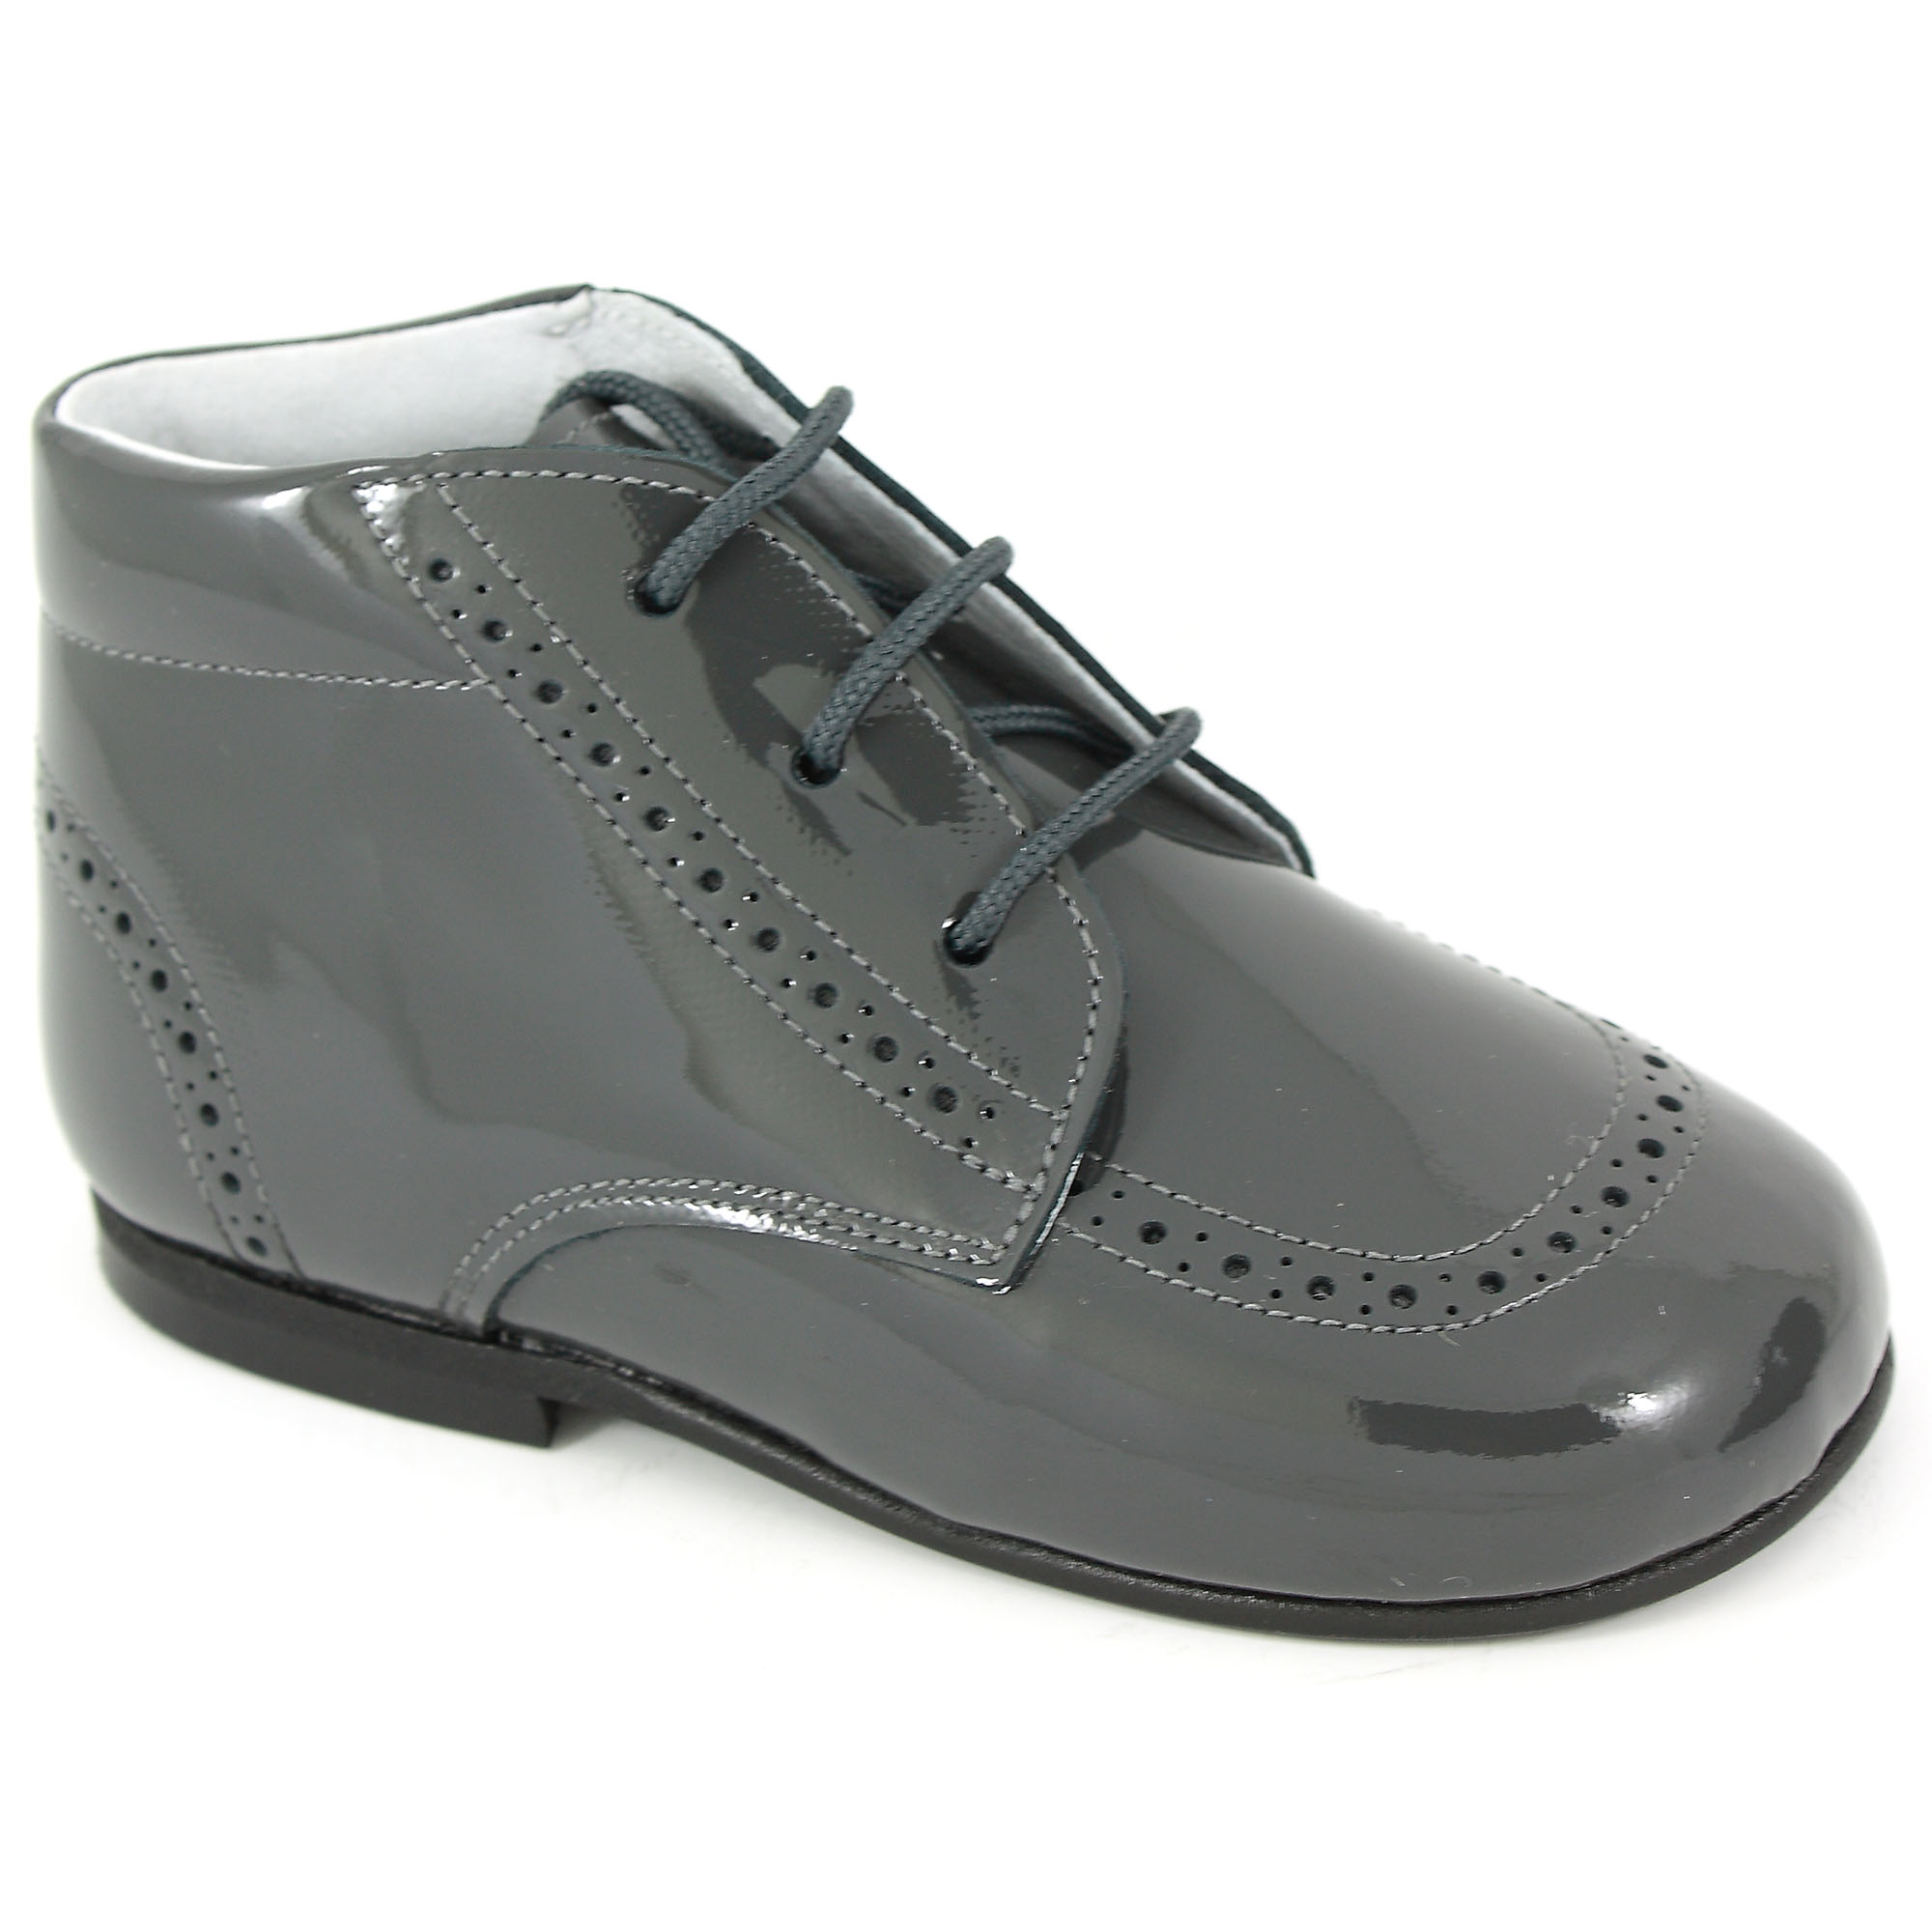 grey shoes baby boy